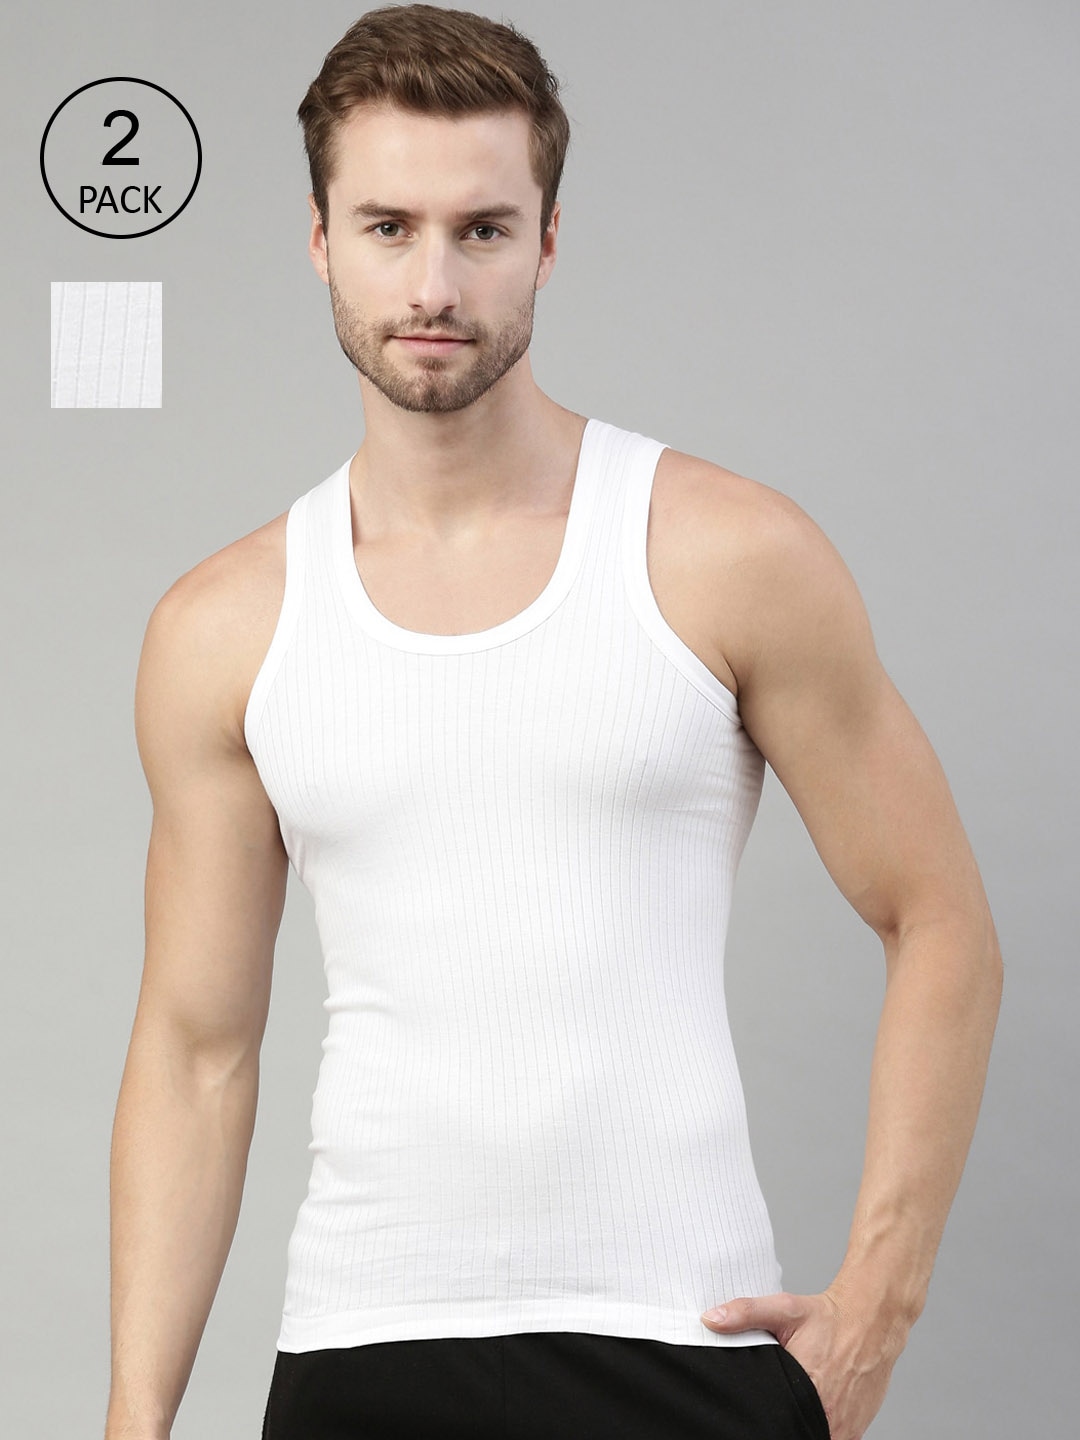 Clothing Innerwear Vests | DIXCY SCOTT Men Pack Of 2 Solid Cotton Innerwear Gym Vests - QV42753